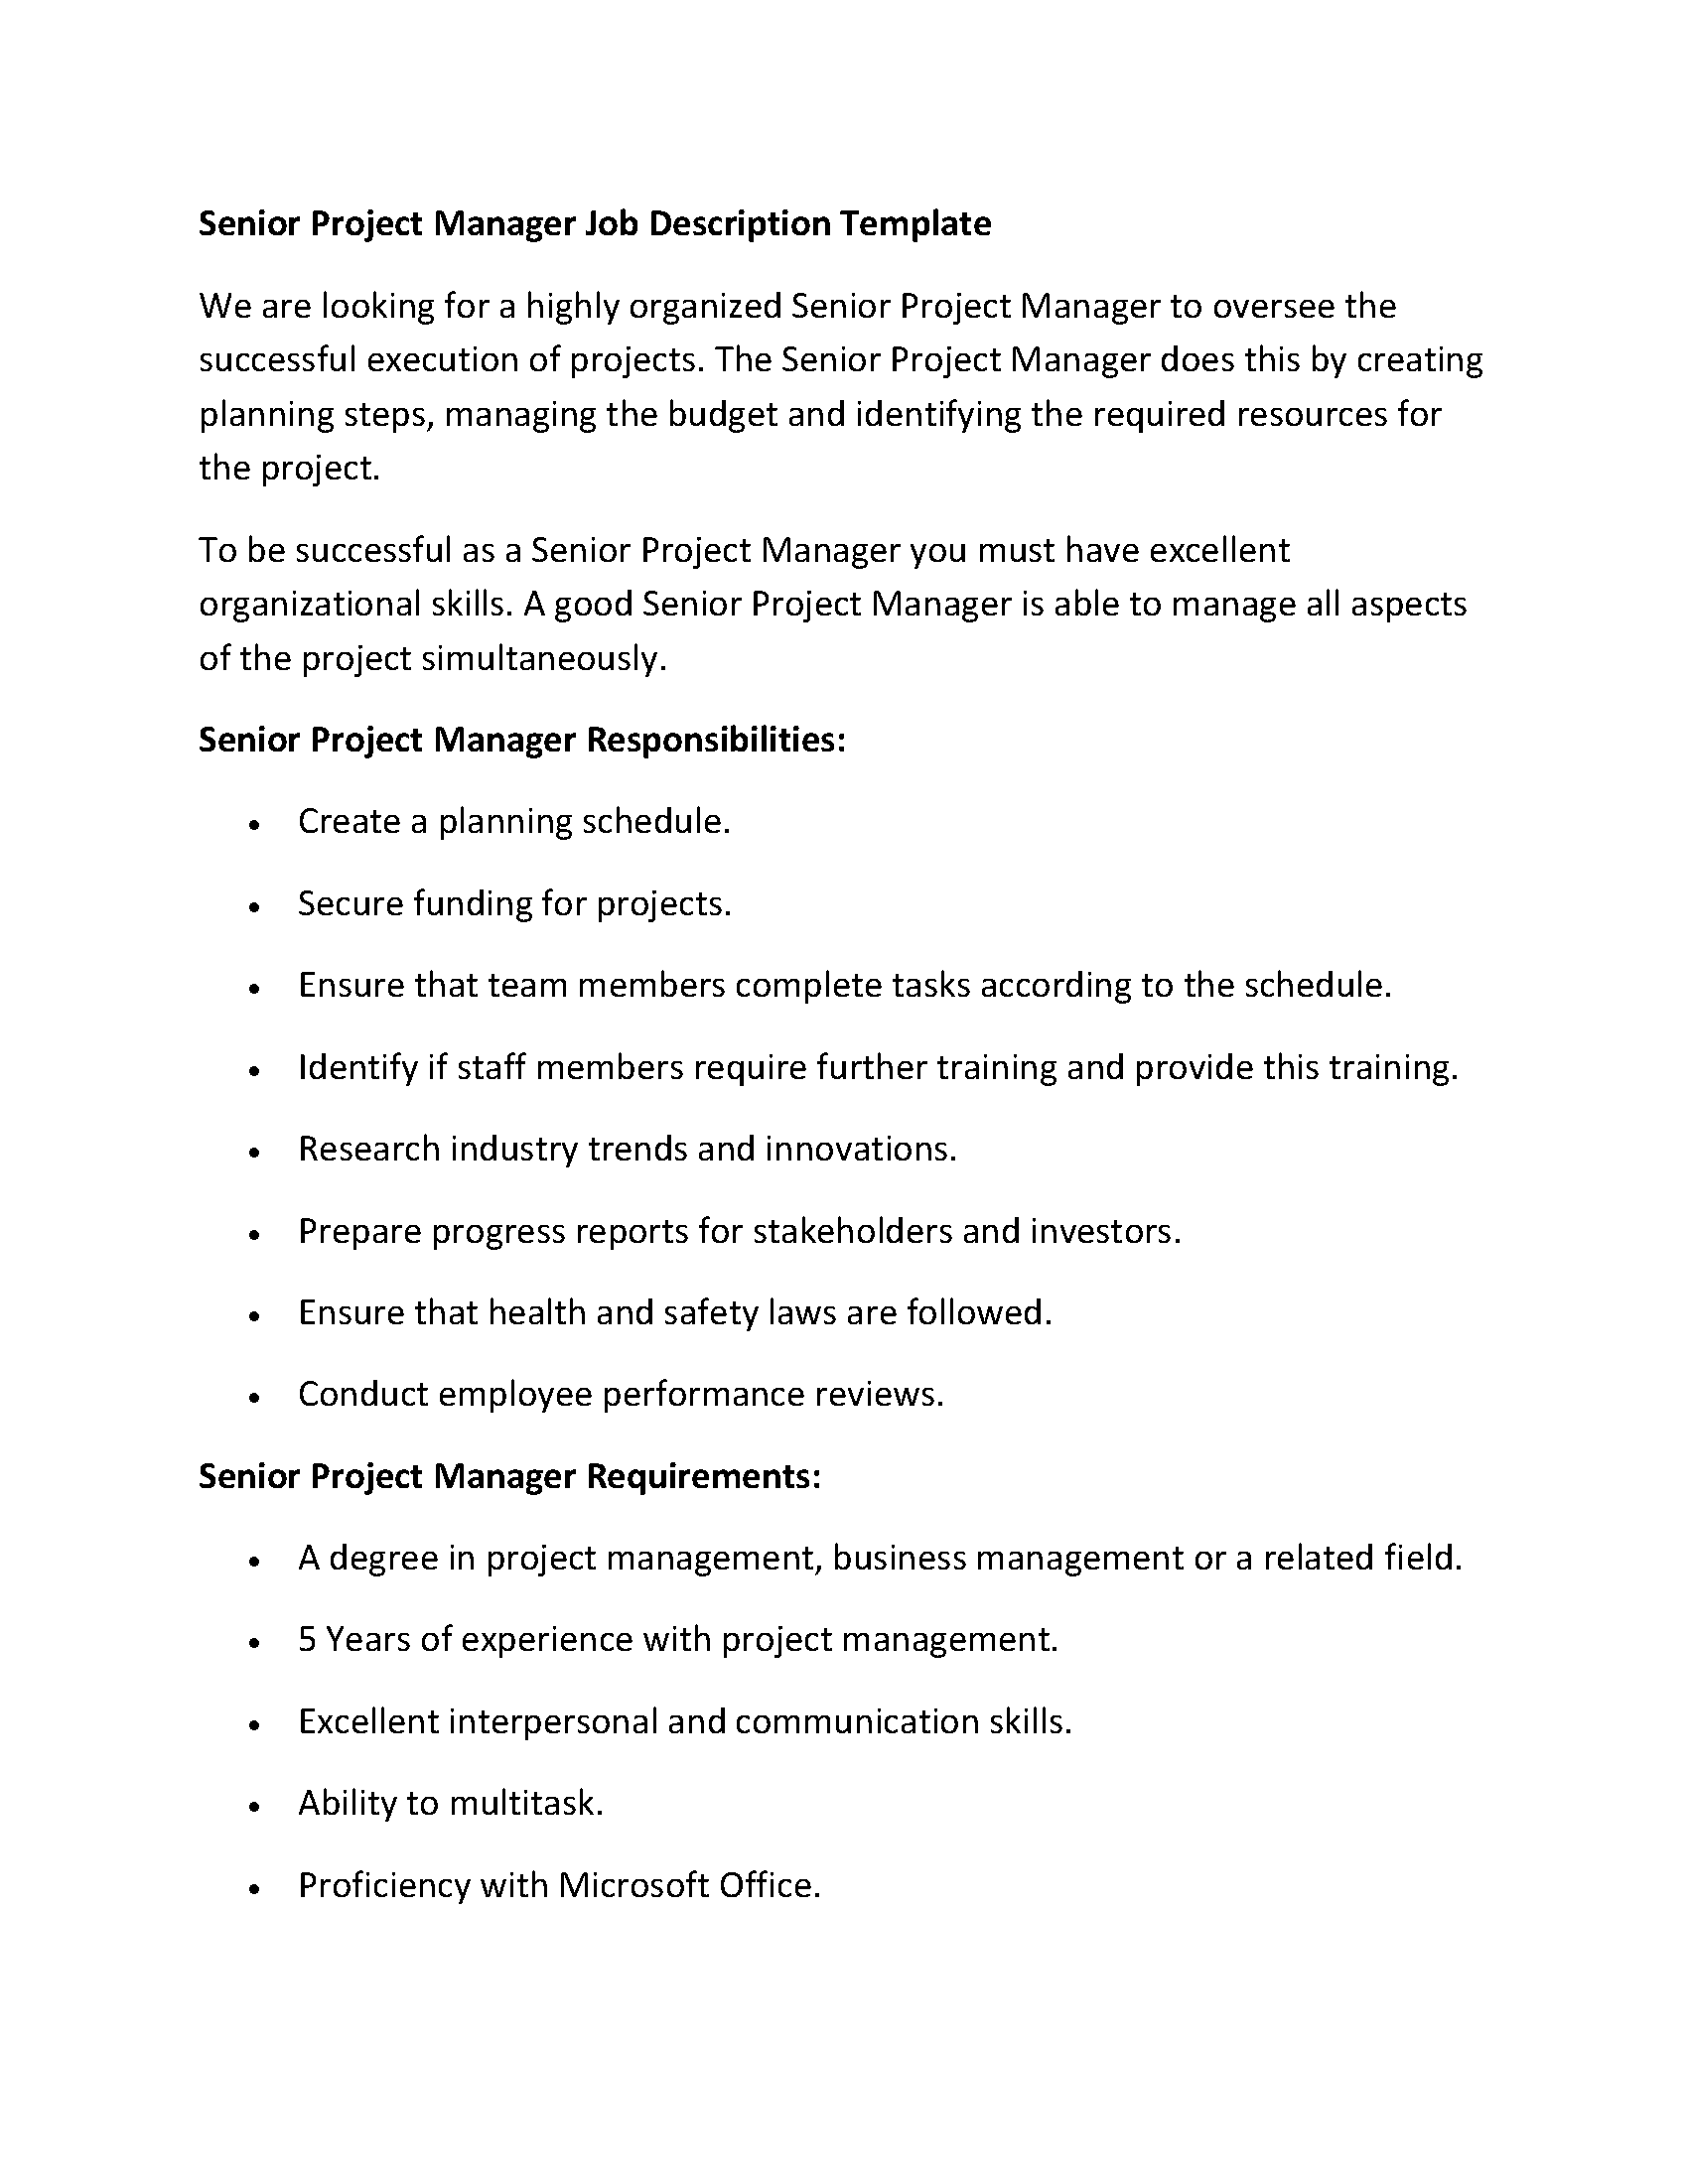 Senior Project Manager Job Description Template